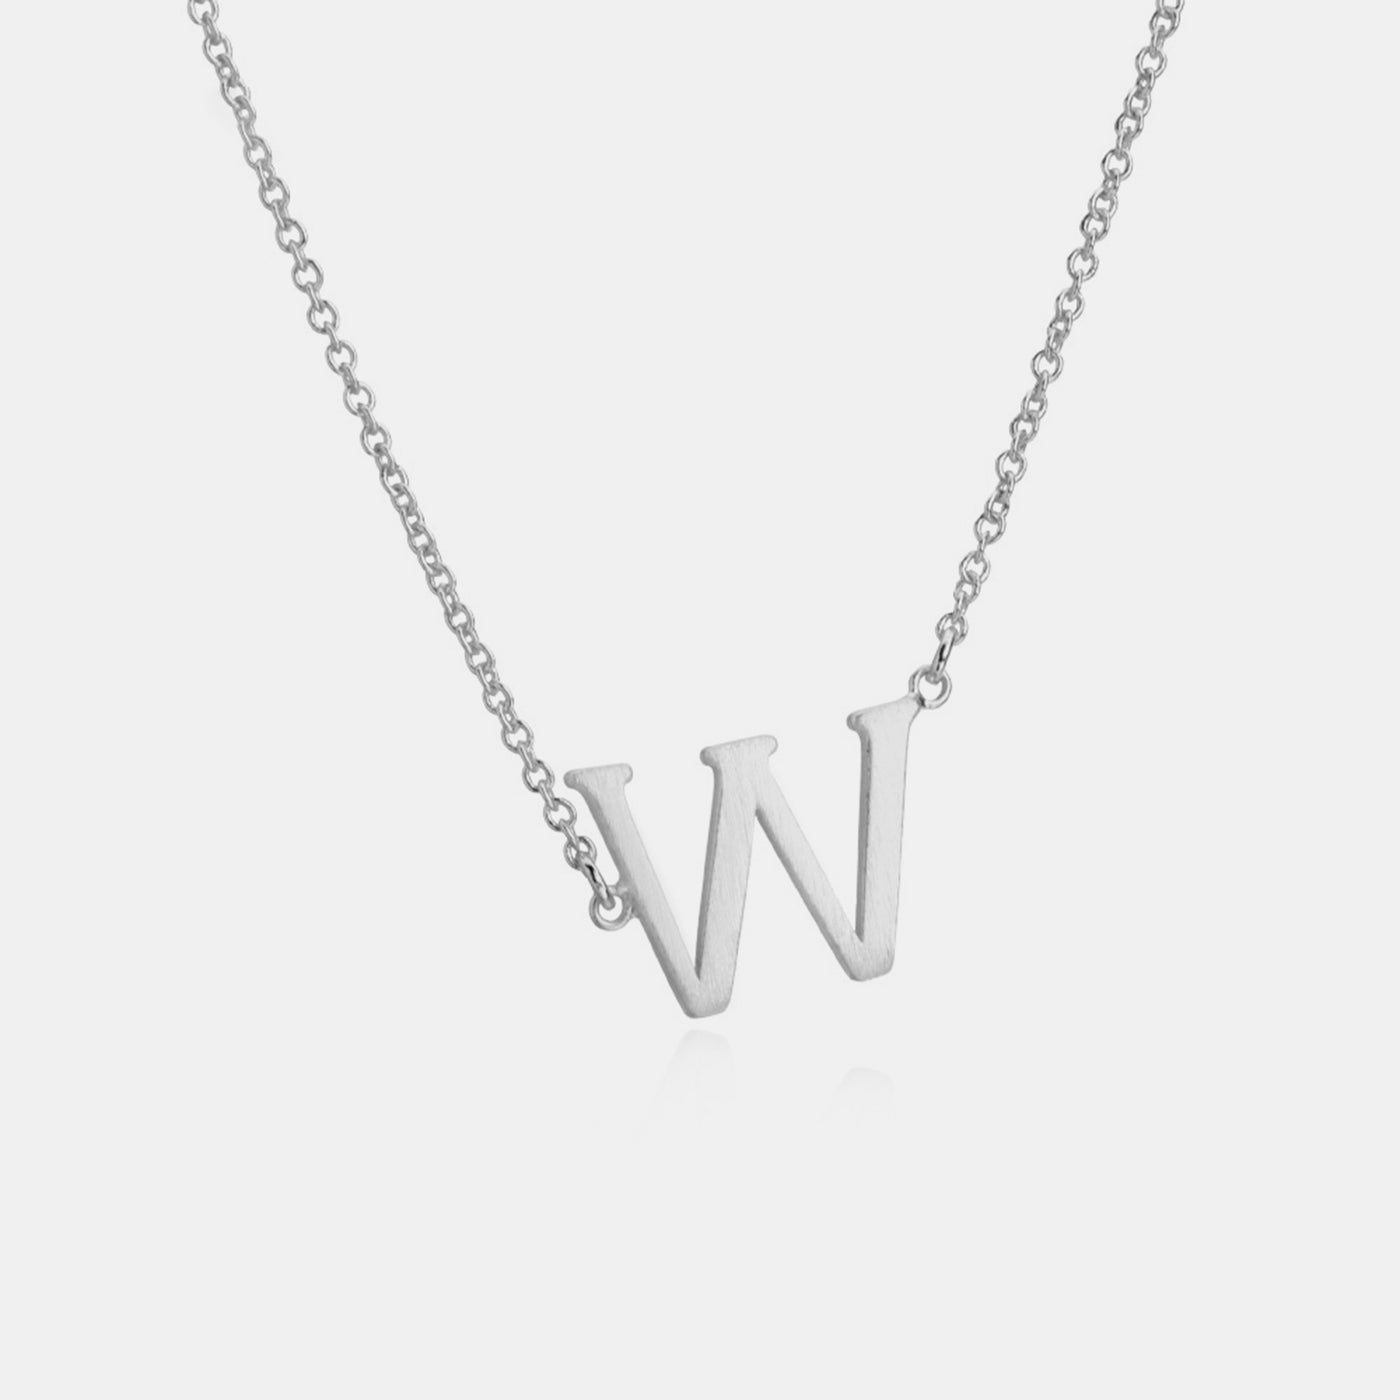 Initial Letter Pendant Necklace (W-Z)